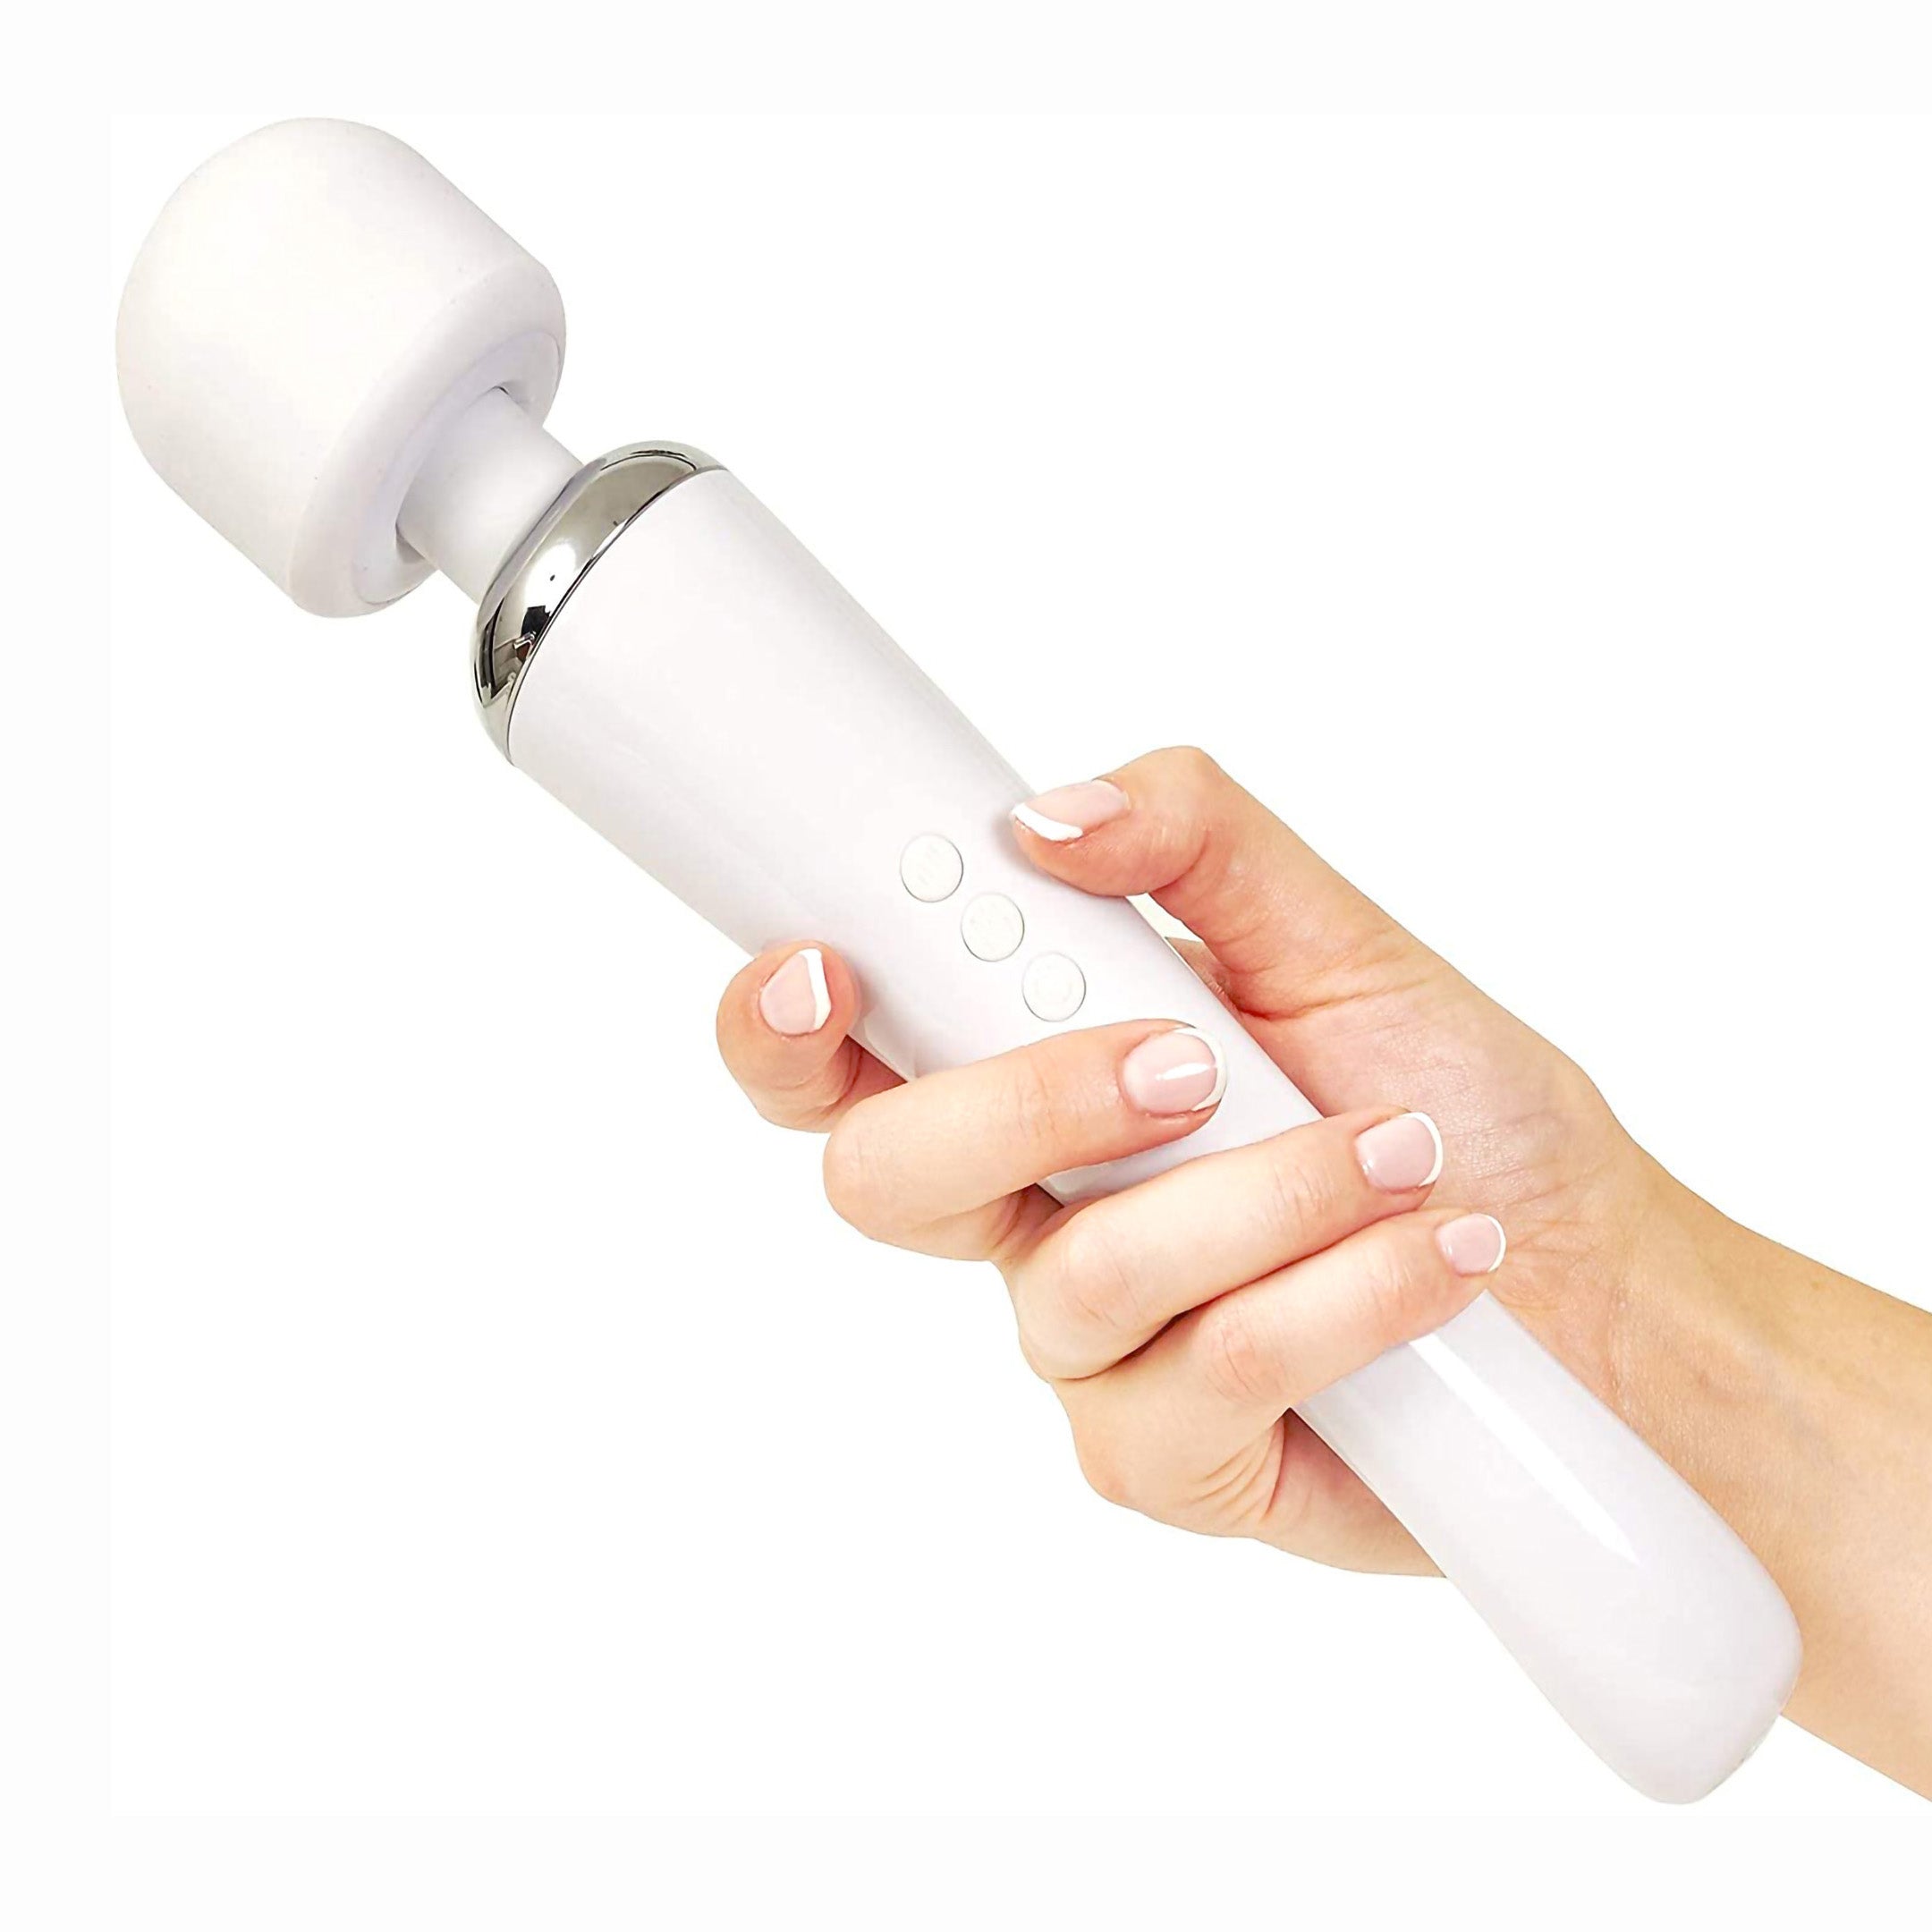 Cordless Handheld Massager Wand Vibrator Stimulator Sex Toy for Women Couples